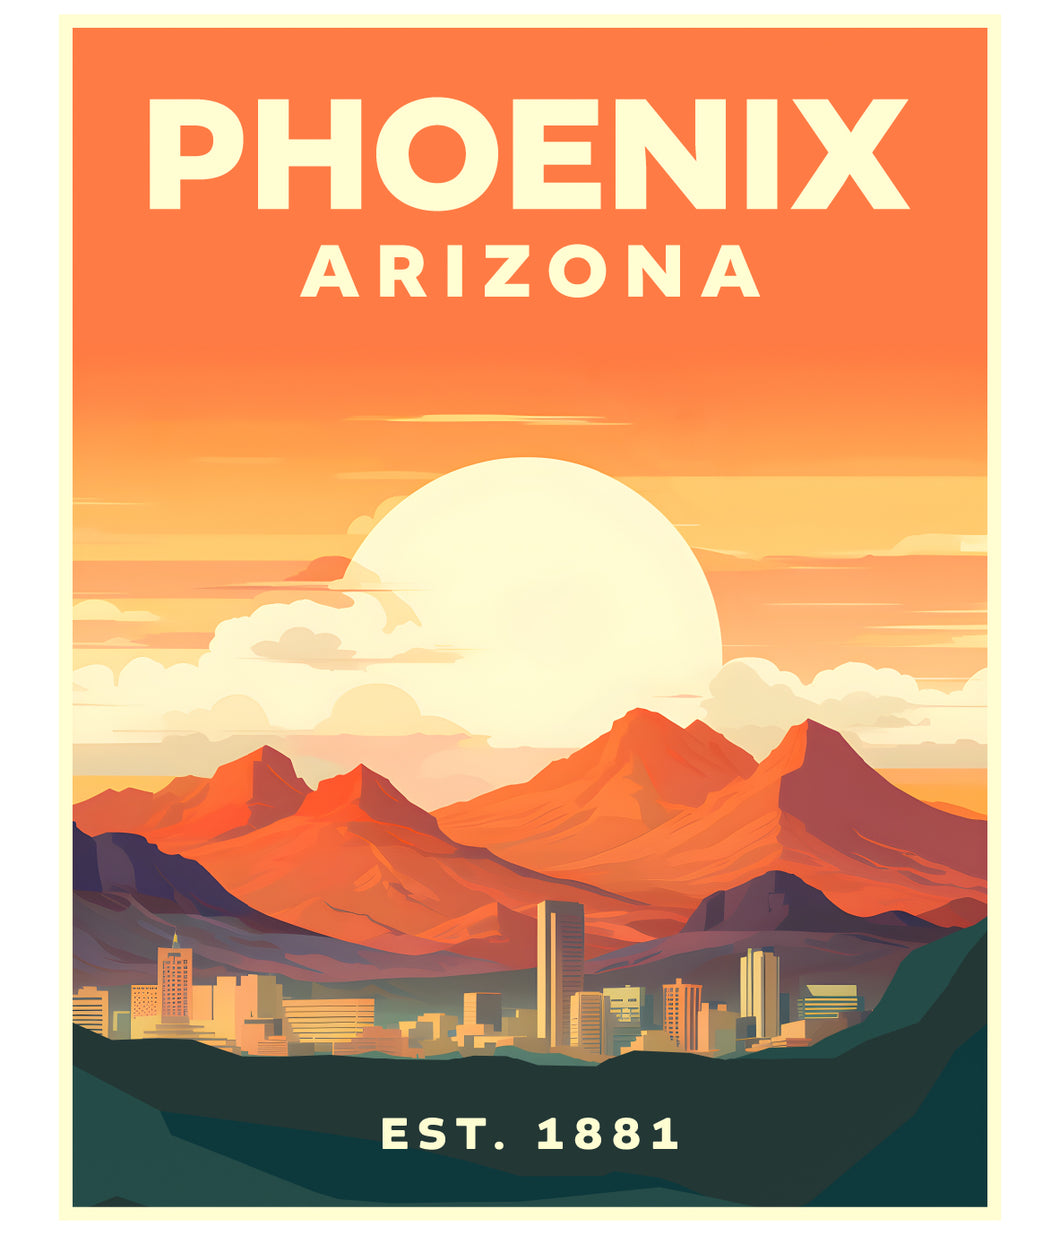 Exclusive Phoenix Arizona Collectible - Vintage Travel Poster Art